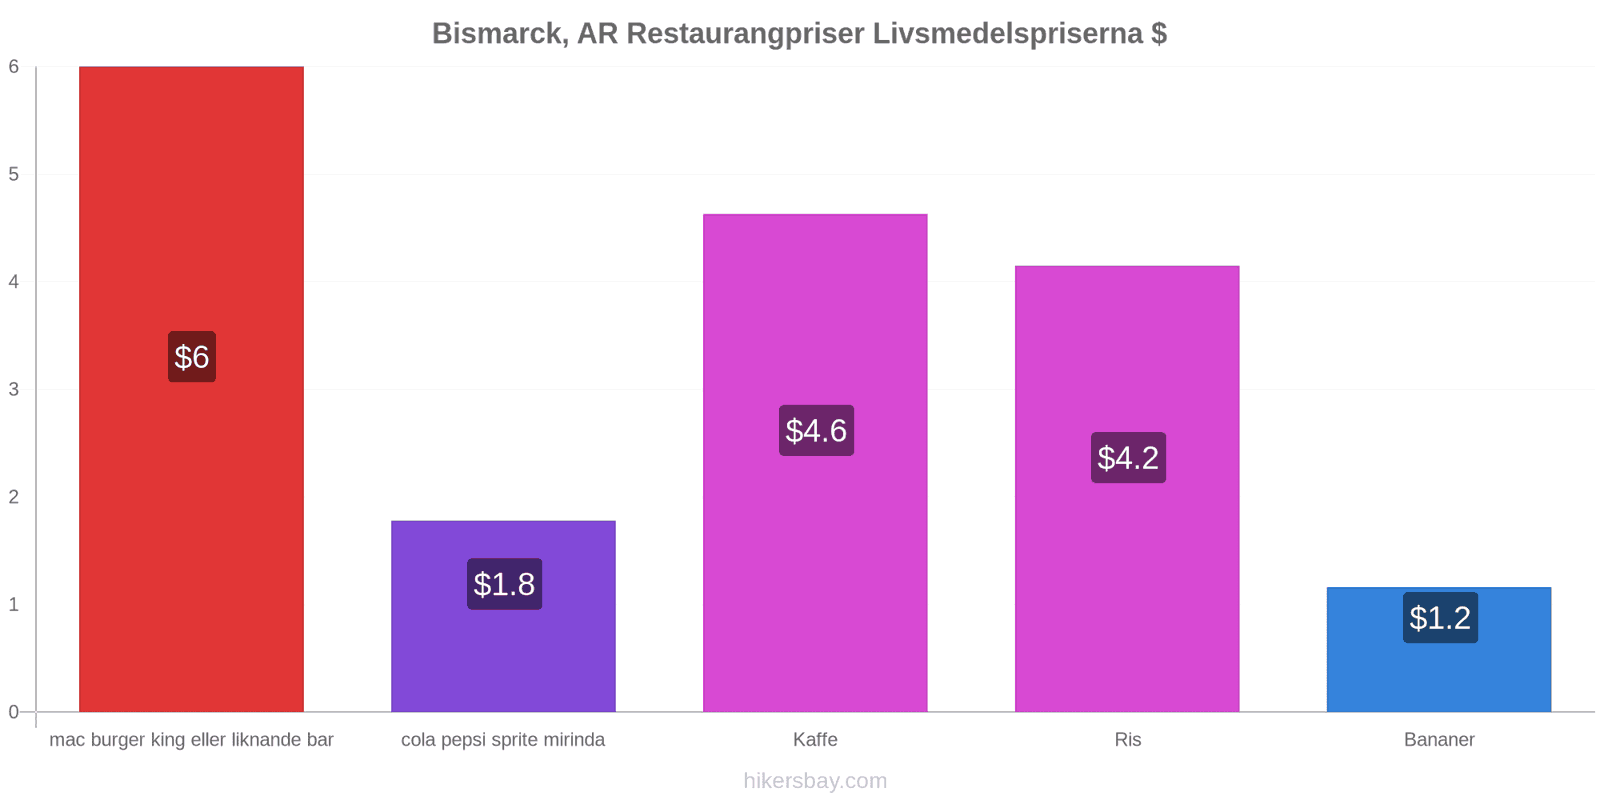 Bismarck, AR prisändringar hikersbay.com